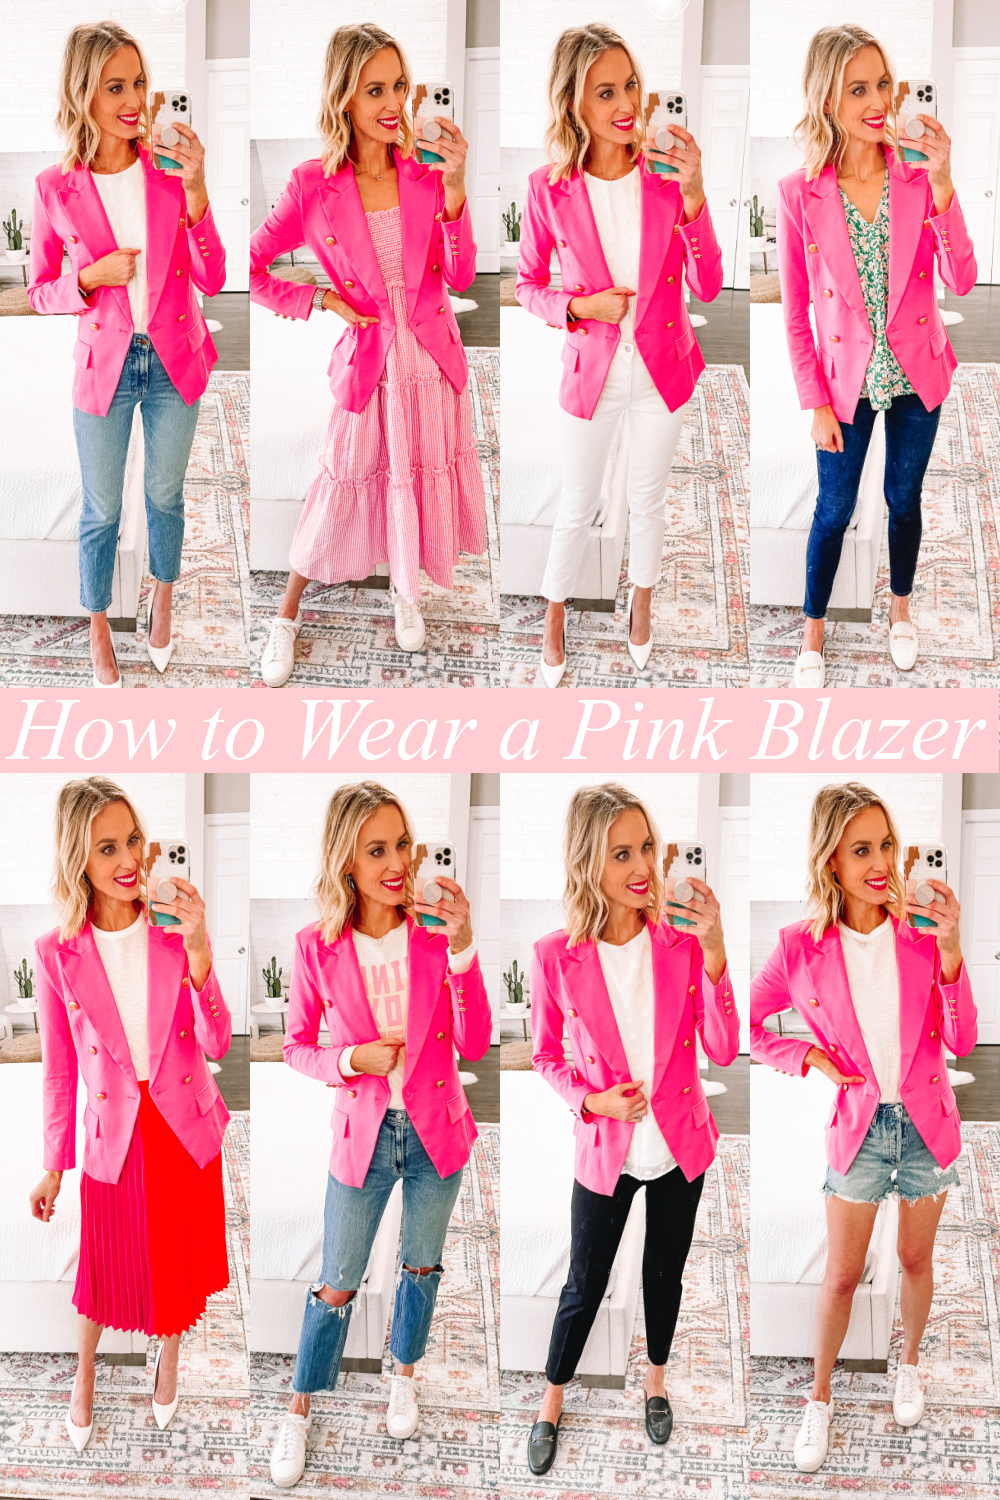 https://www.straightastyleblog.com/wp-content/uploads/2022/02/how-to-wear-a-pink-blazer-pin.jpeg